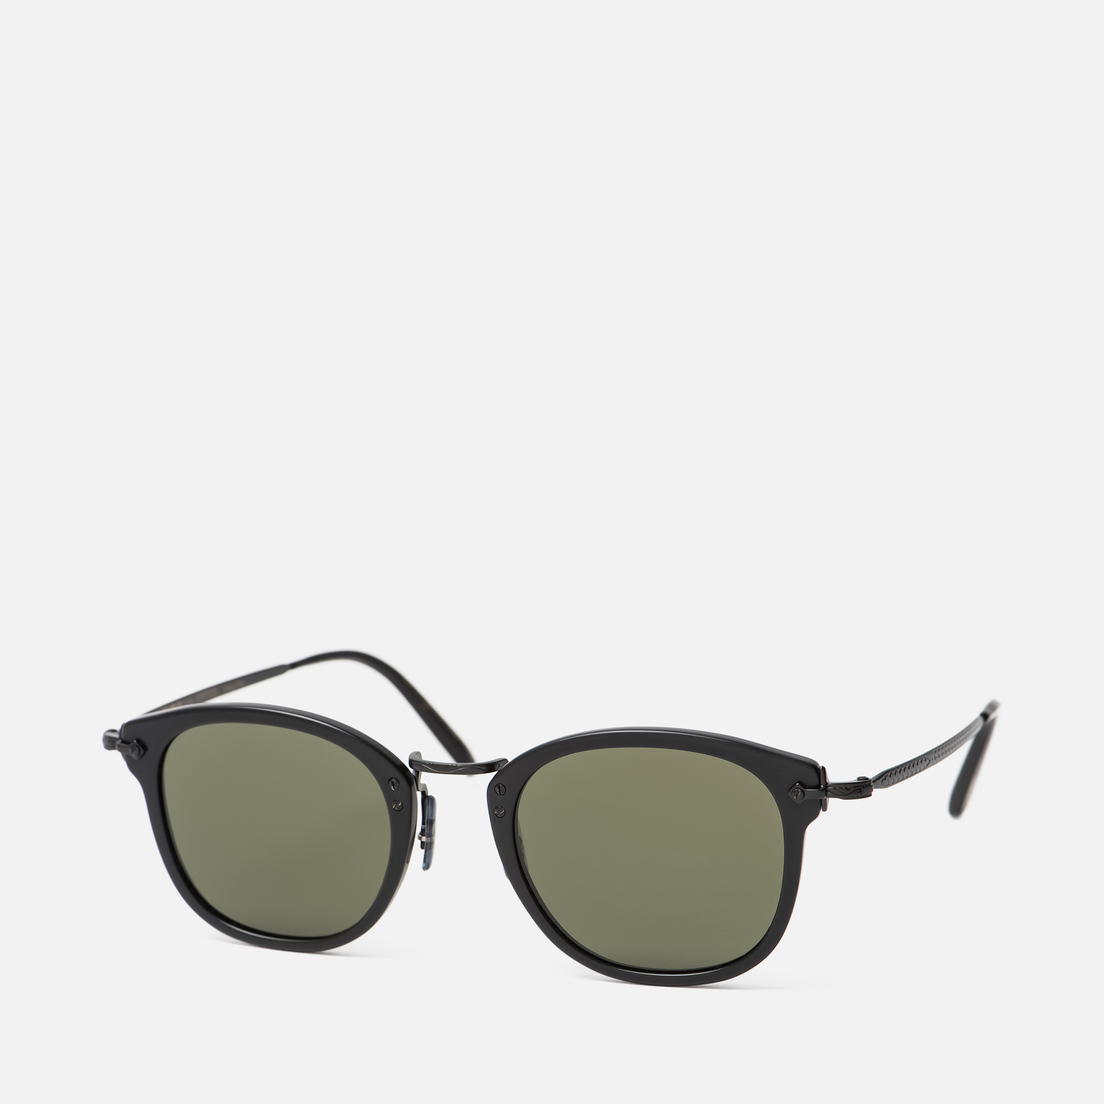 Oliver Peoples Солнцезащитные очки OP-506 Sun